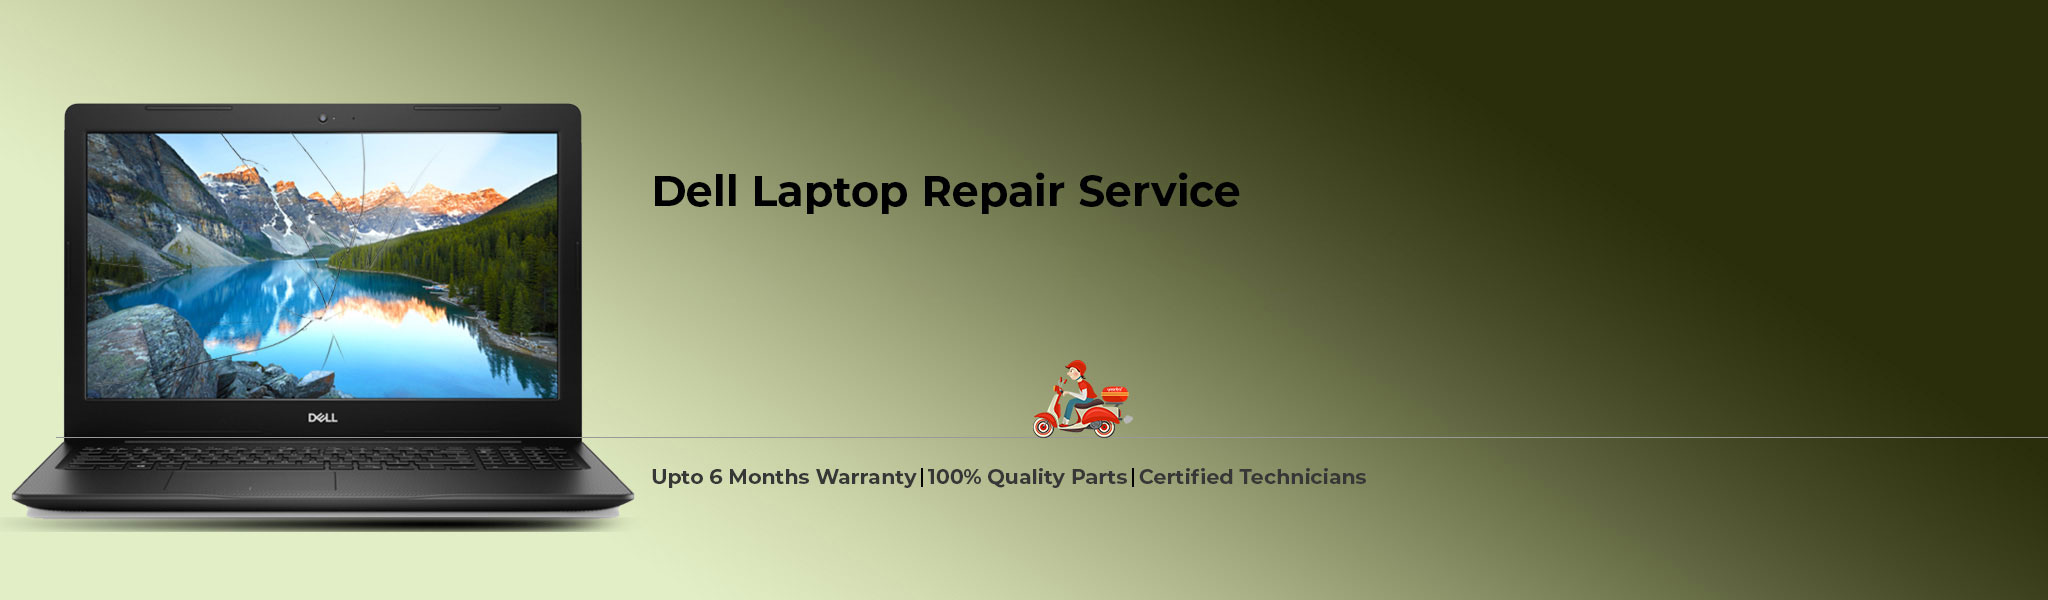 dell-laptop-repair.jpg